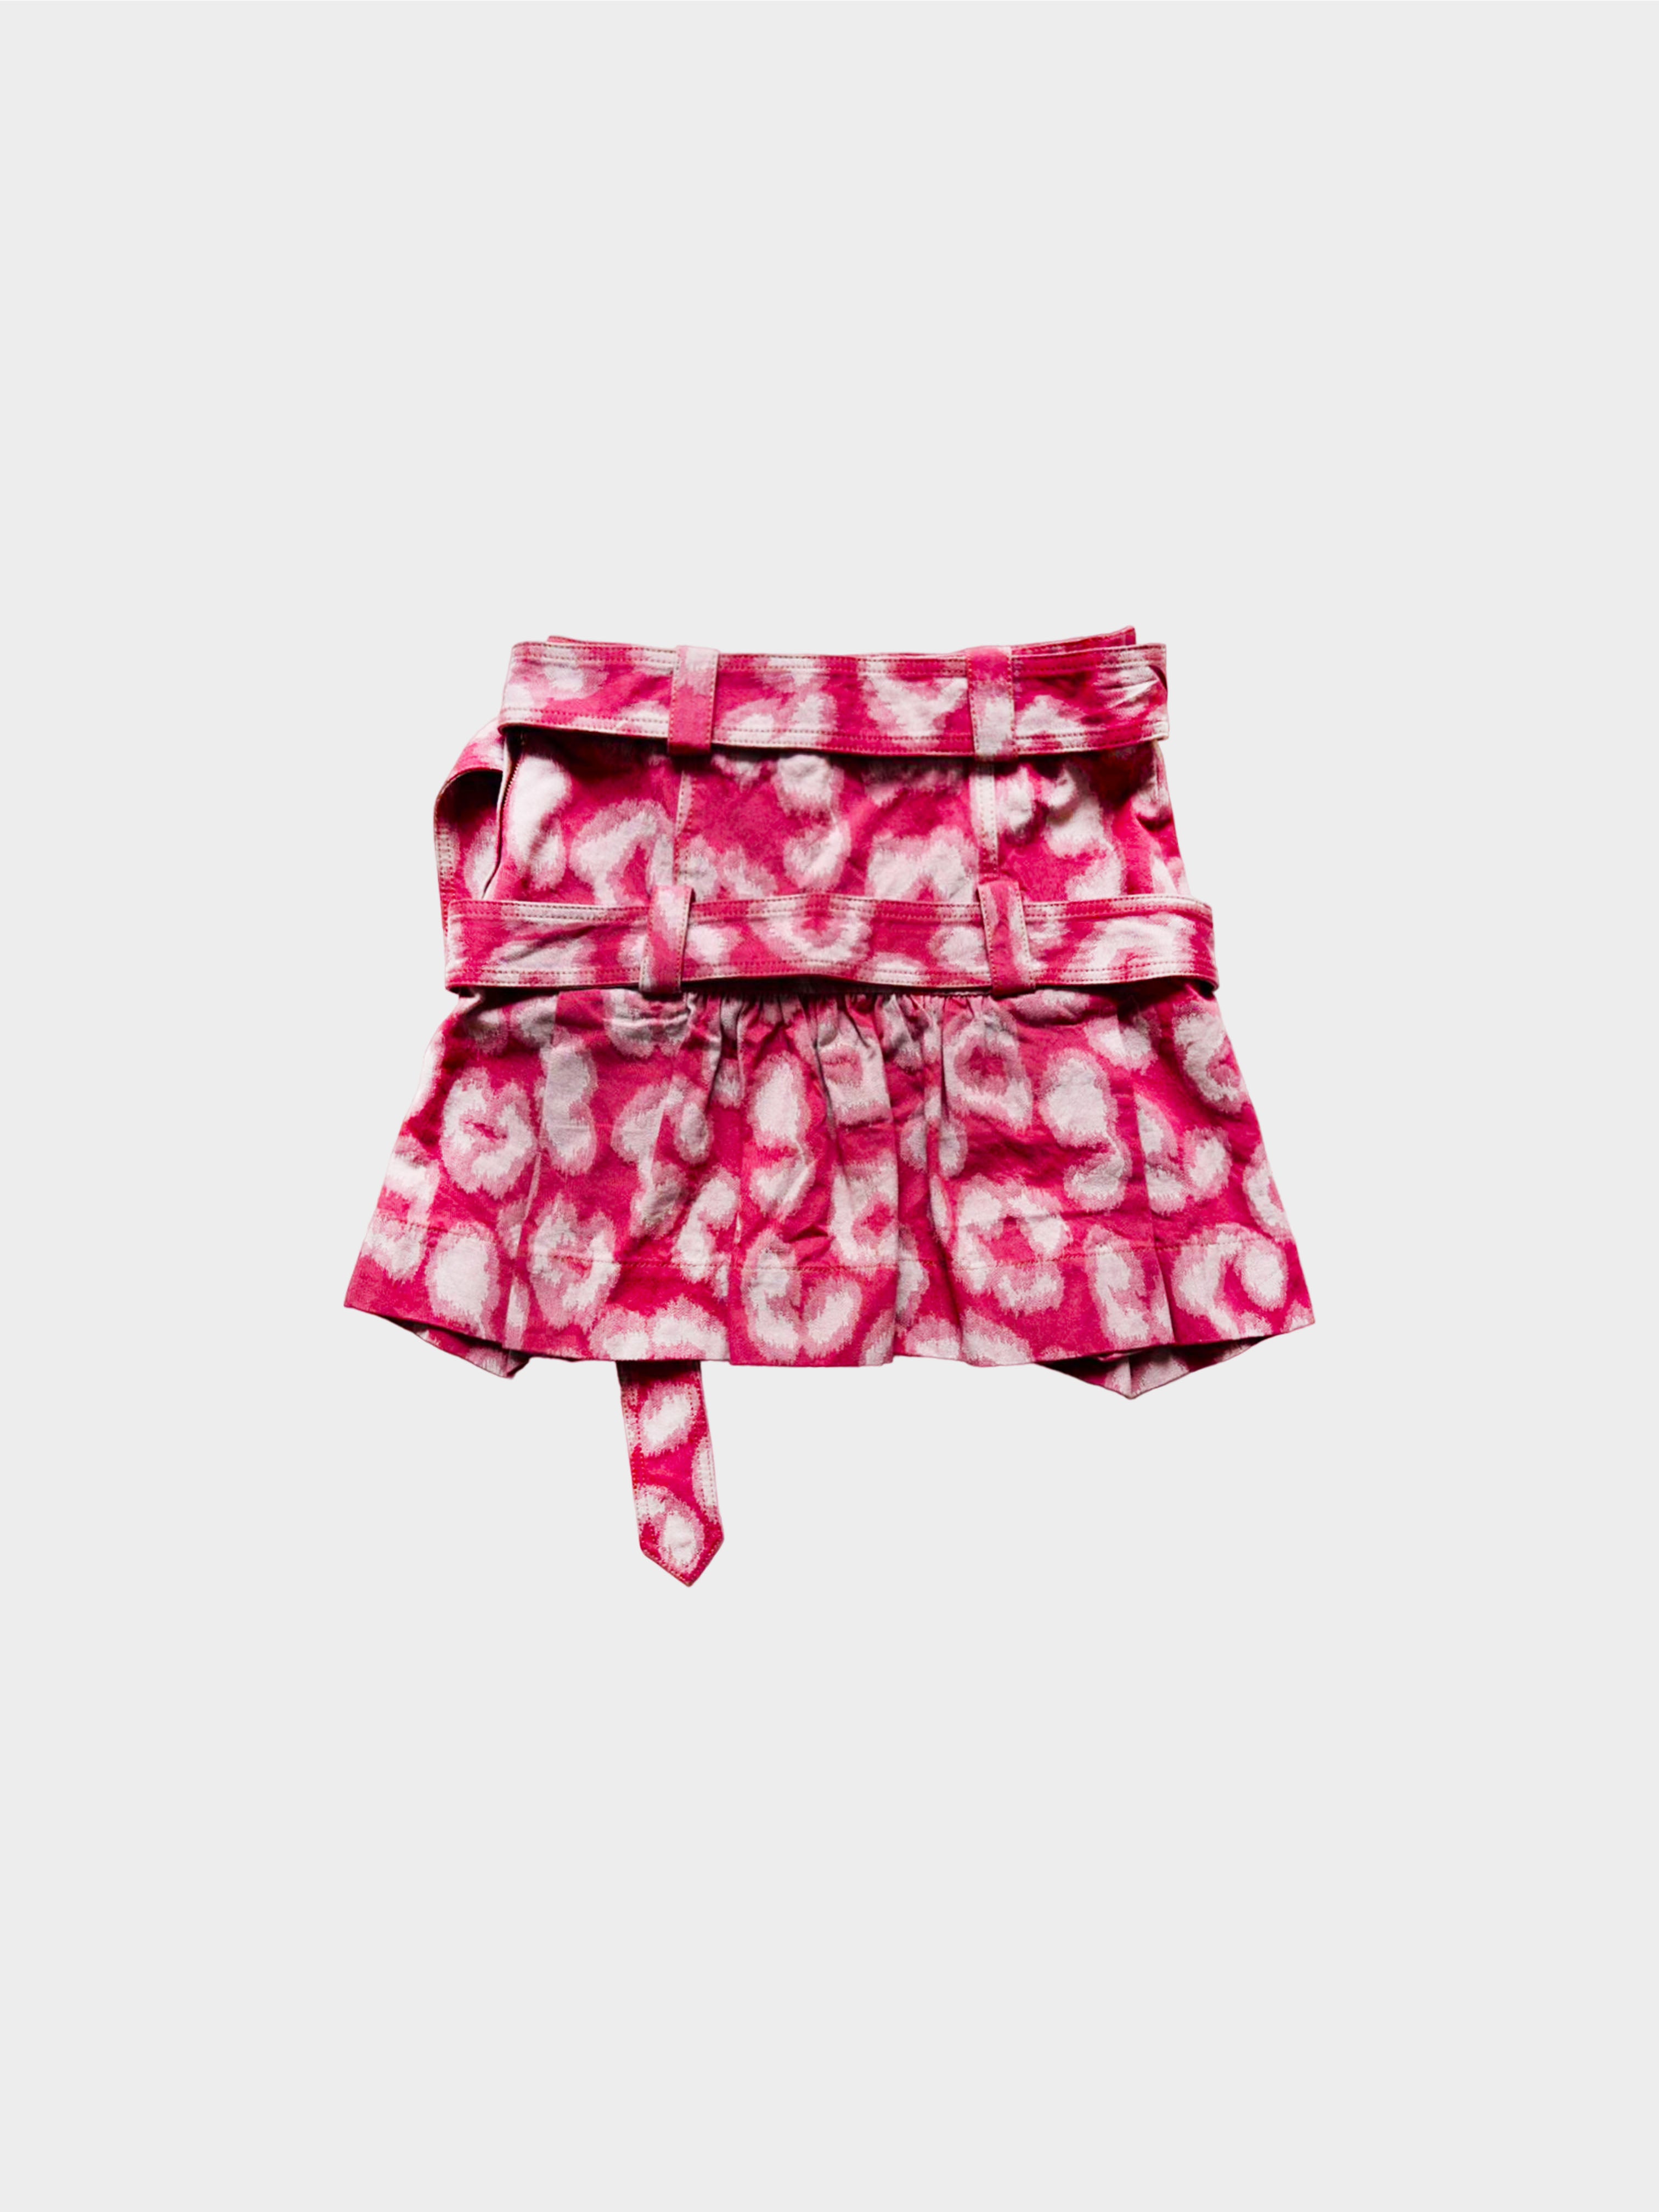 Vivienne Westwood 2000s Rare Leopard Bondage Skirt